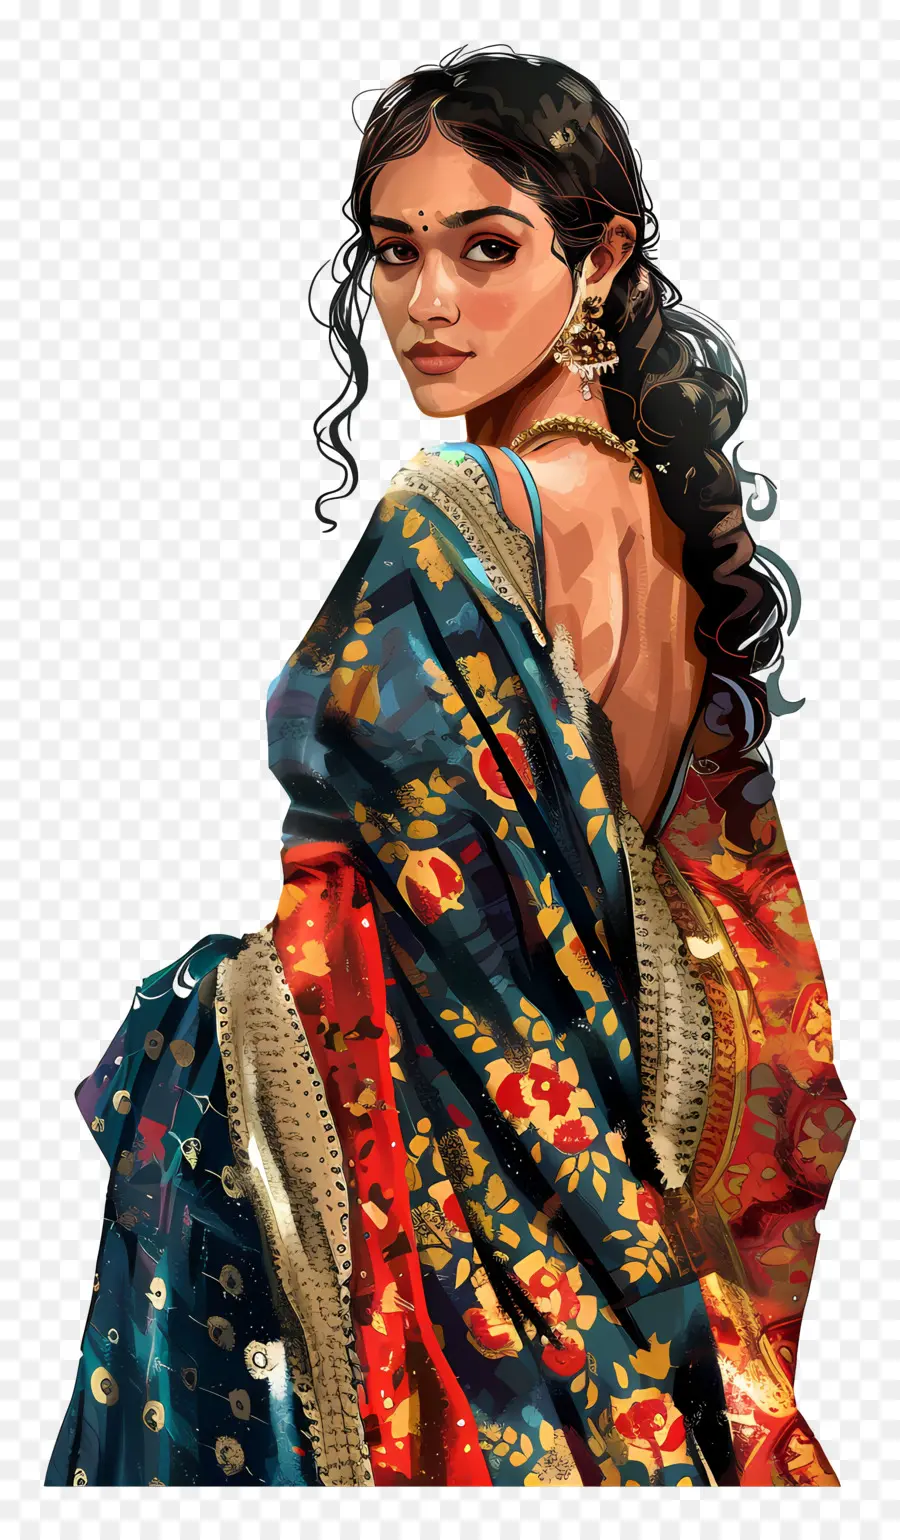 saanjh banarasi saree indian art woman in sari ornate design intricate painting